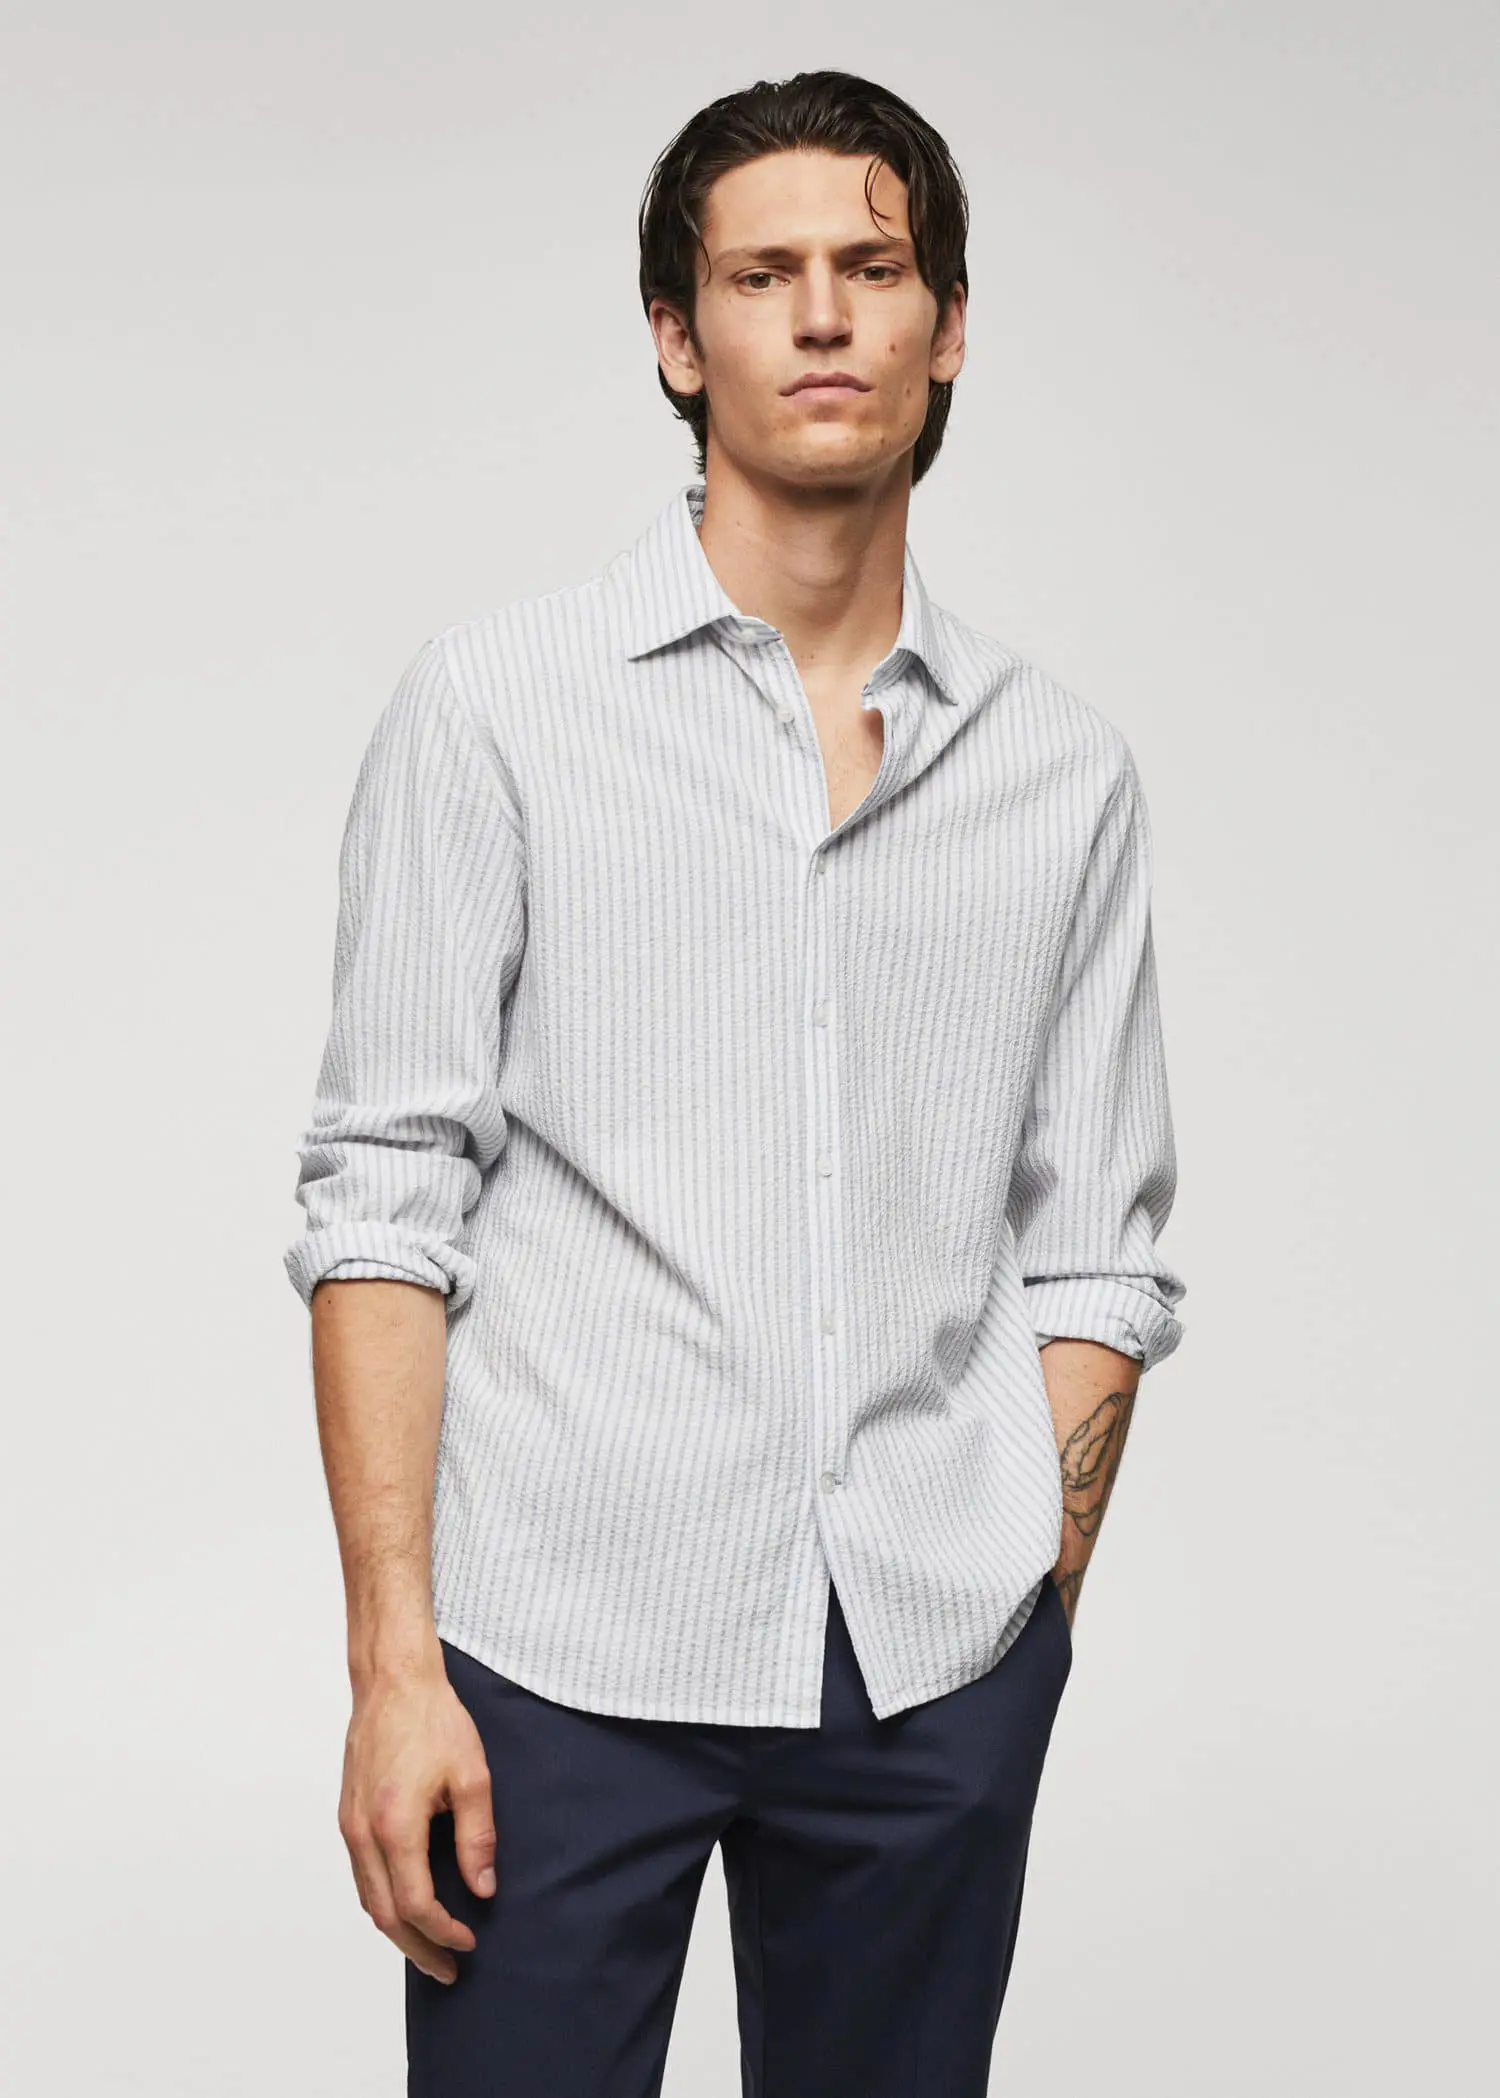 Mango 100% cotton seersucker striped shirt. a man wearing a white and blue striped shirt. 